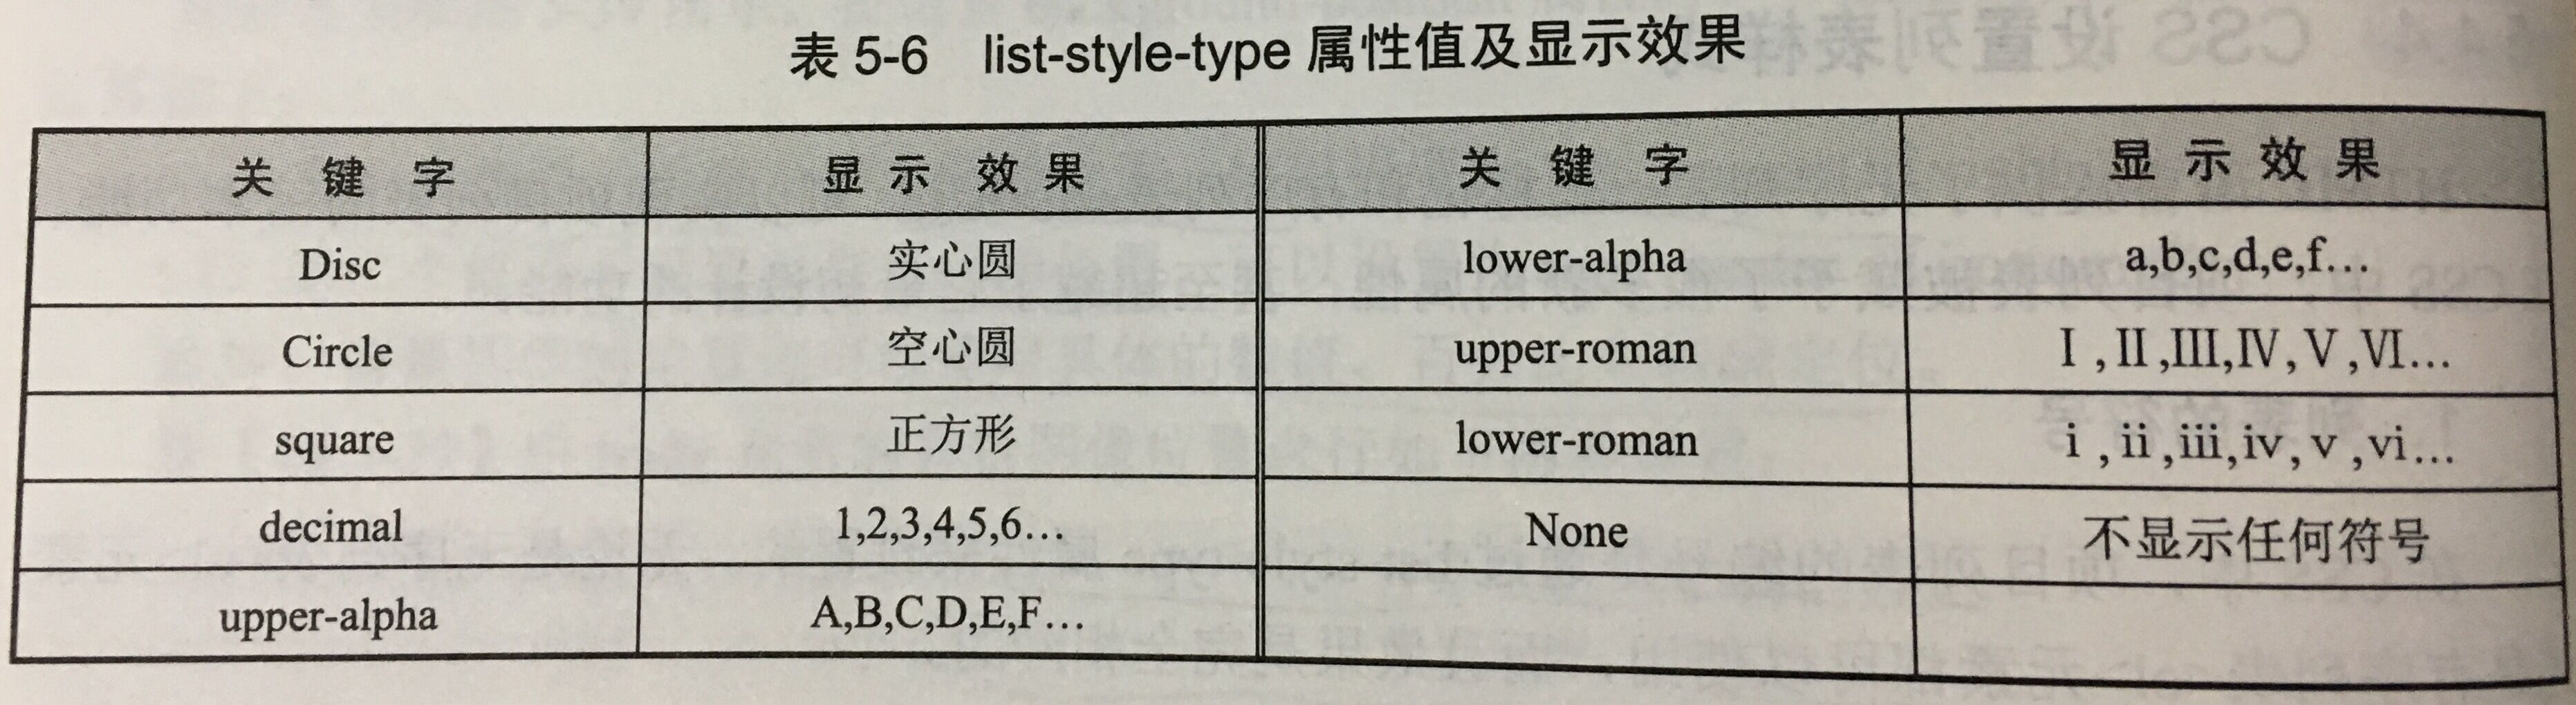 list-style-type属性值